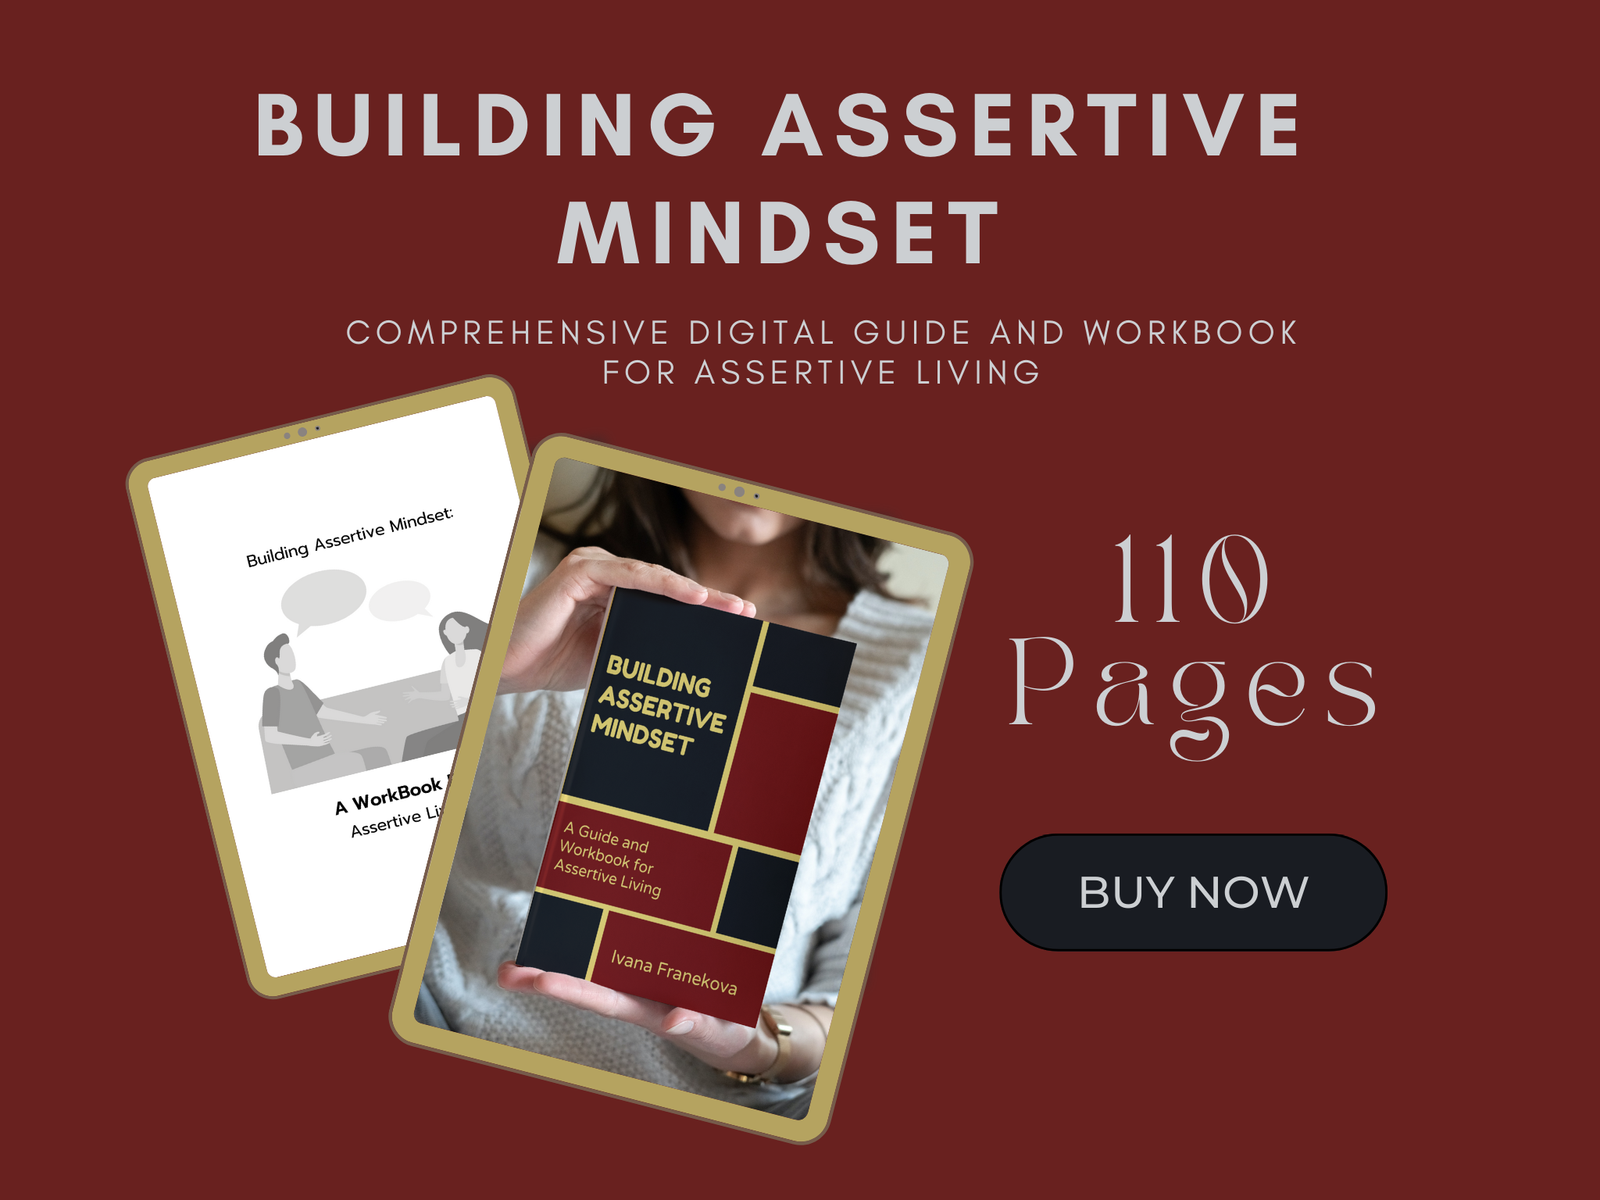 Building Assertive Mindset: A Digital Guide to Assertive Living